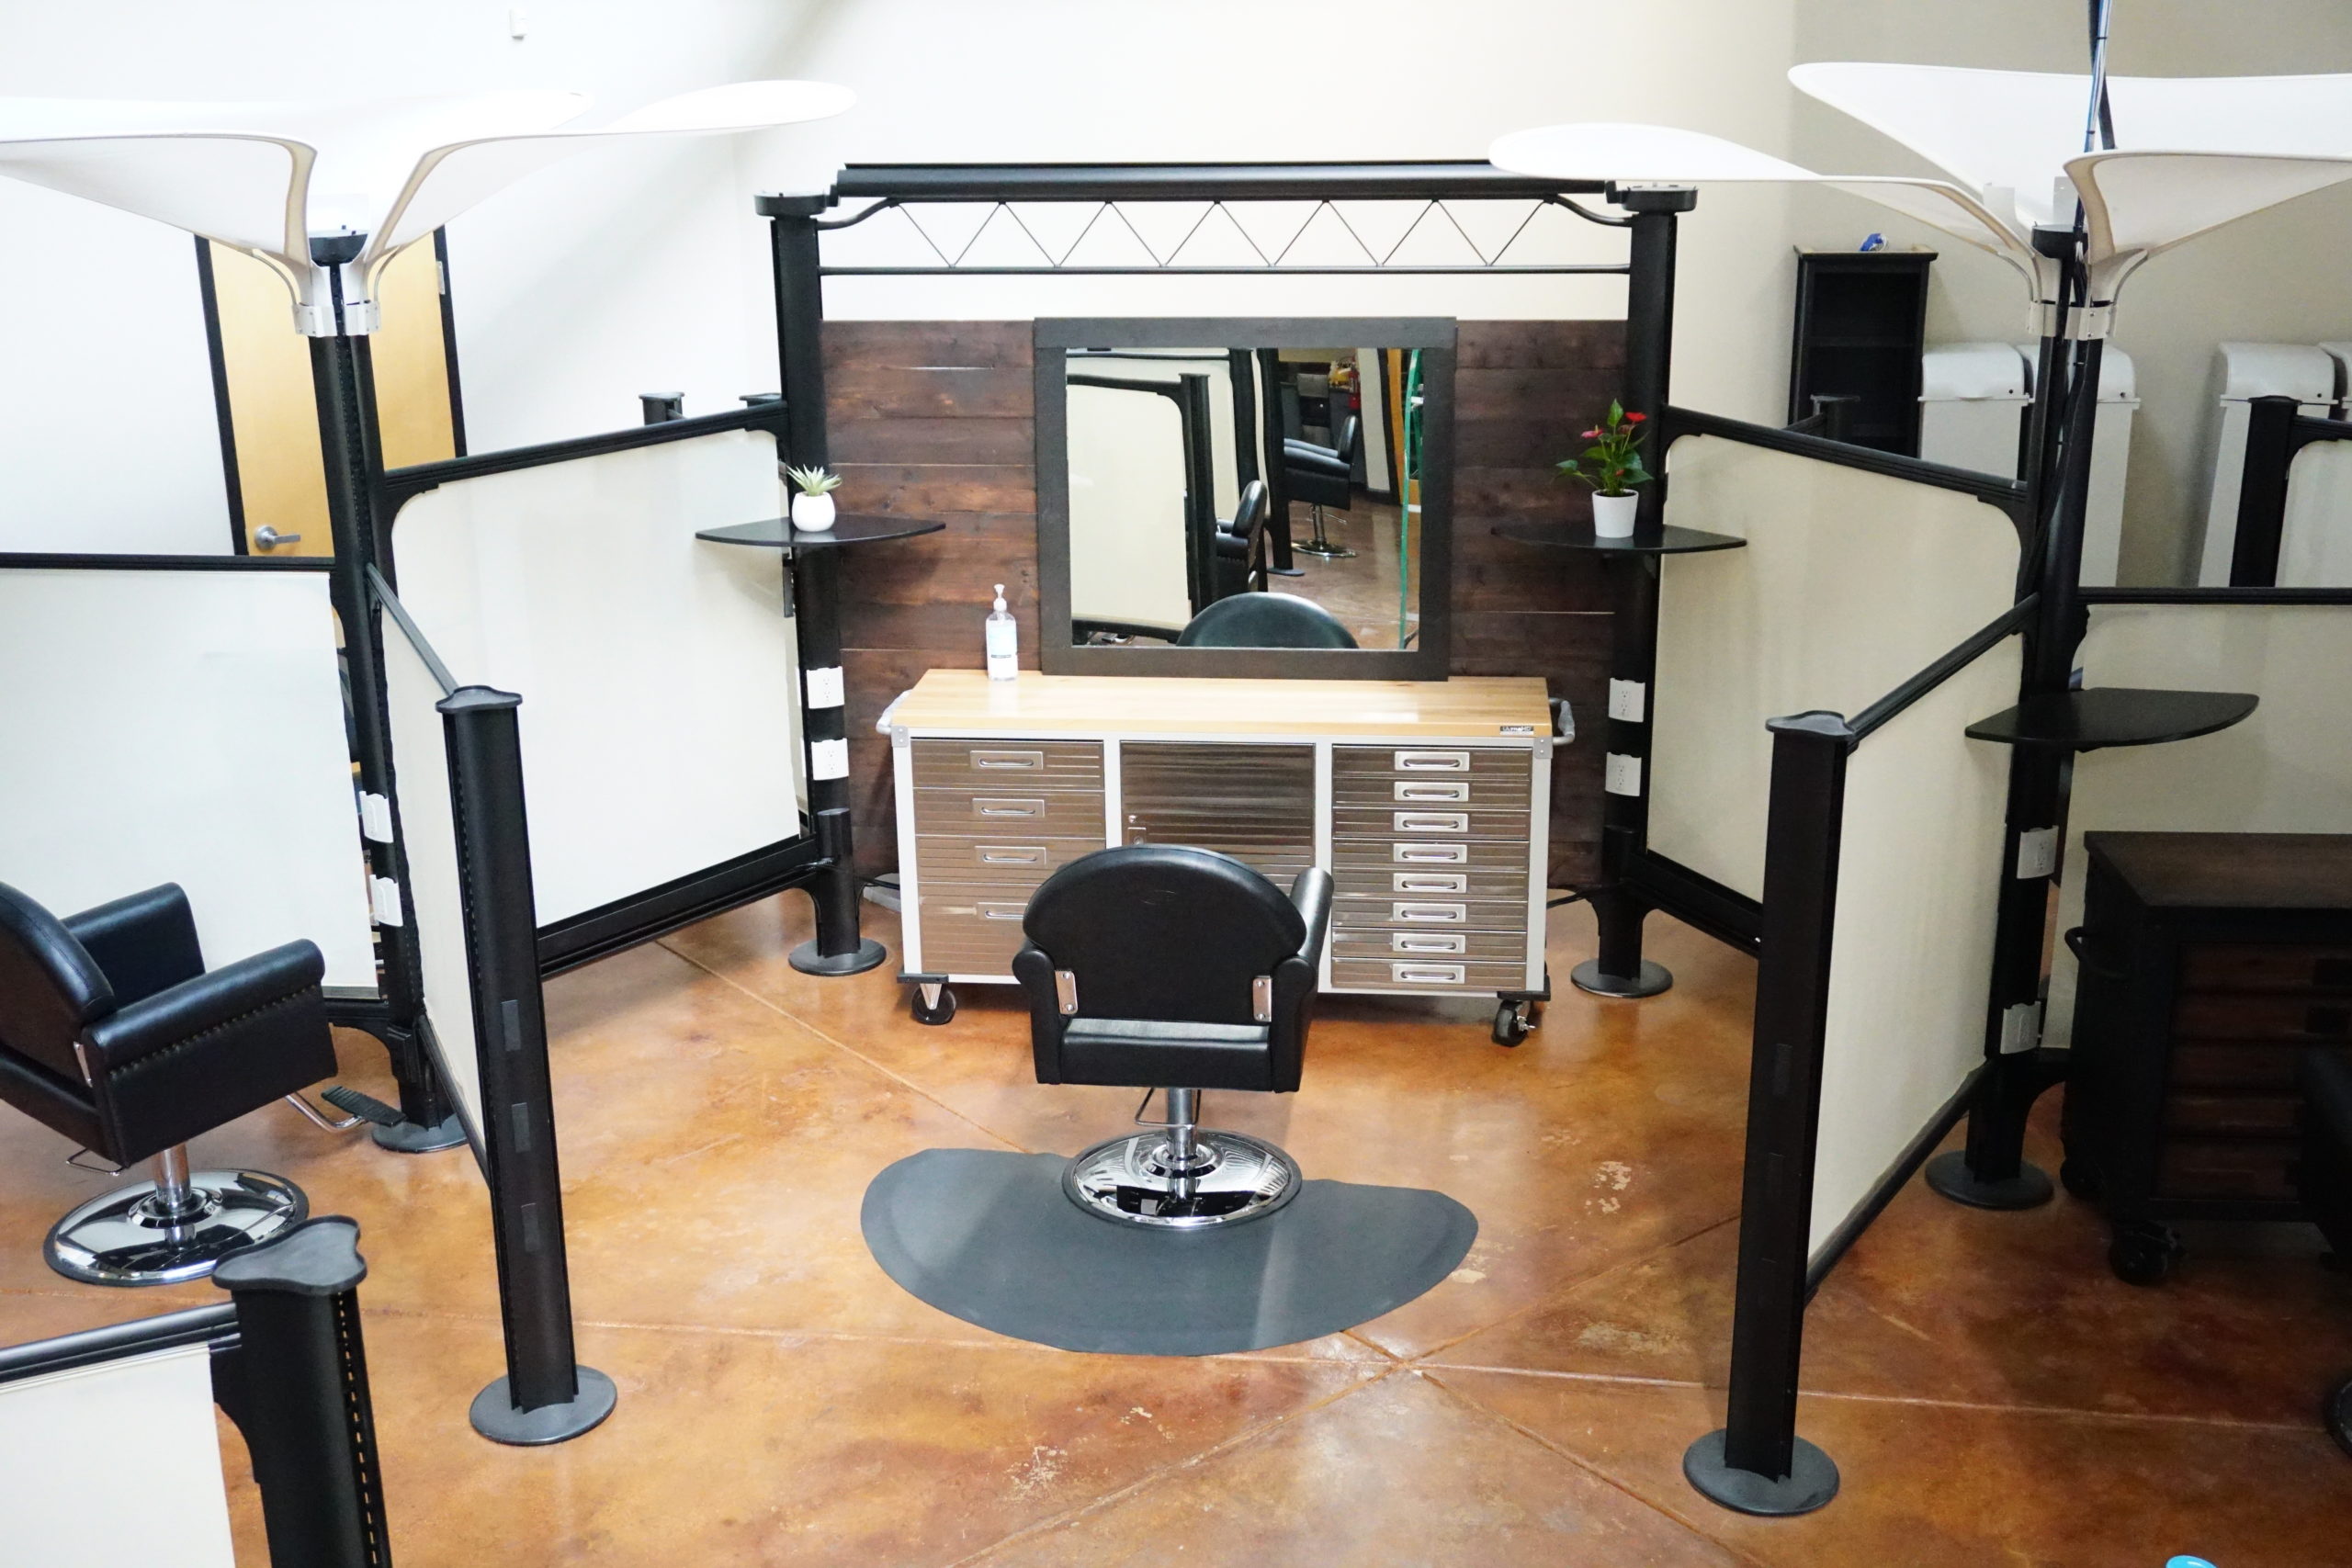 Signature salon pro's beauty salon station.